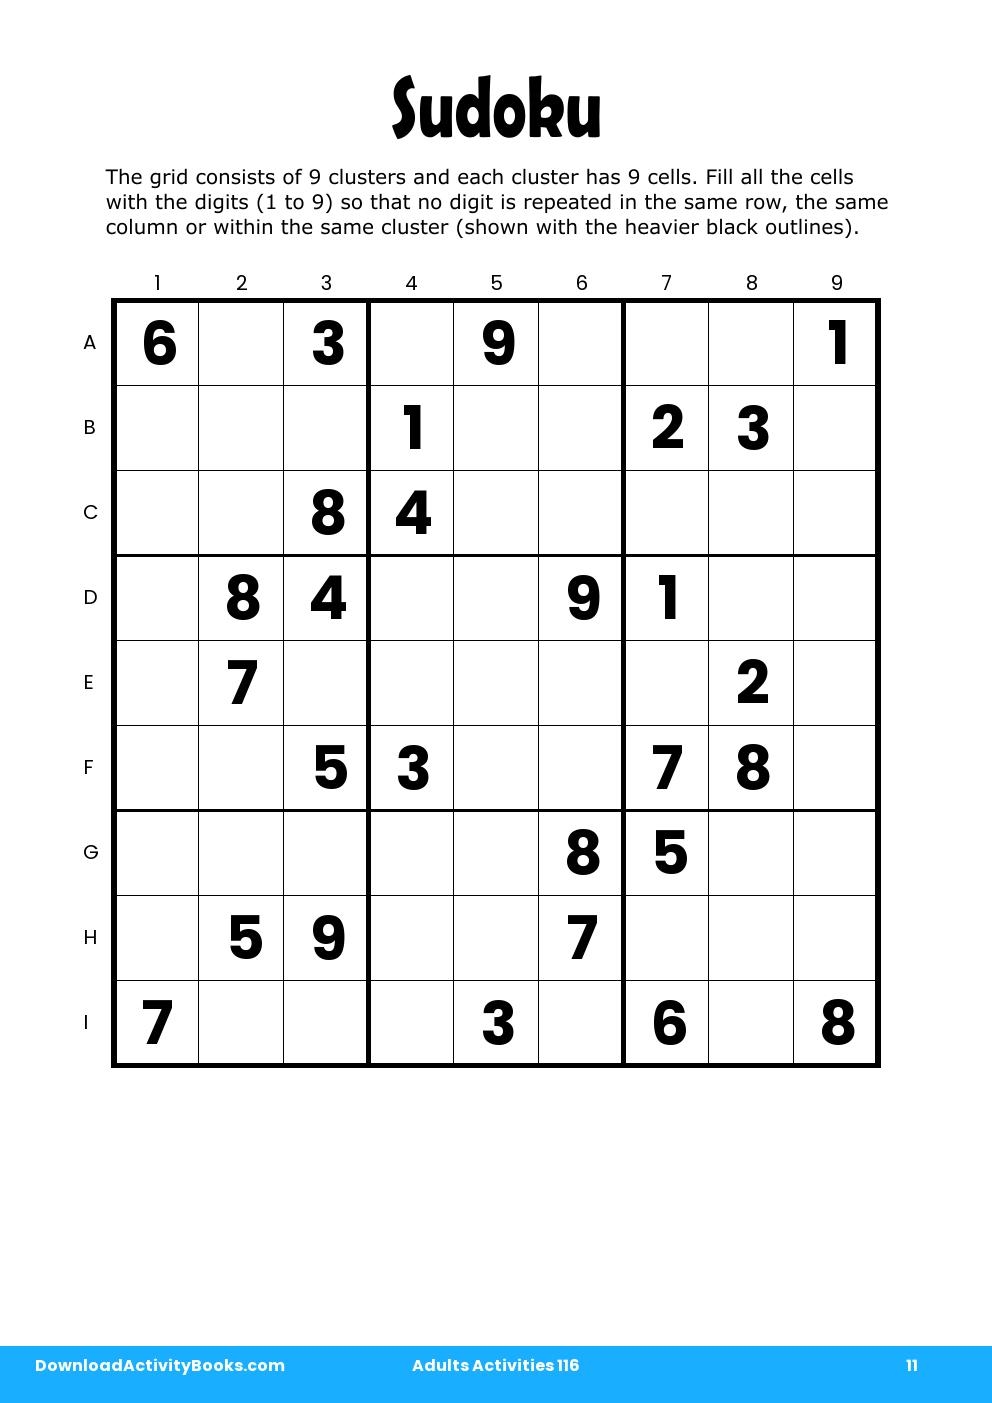 Sudoku in Adults Activities 116